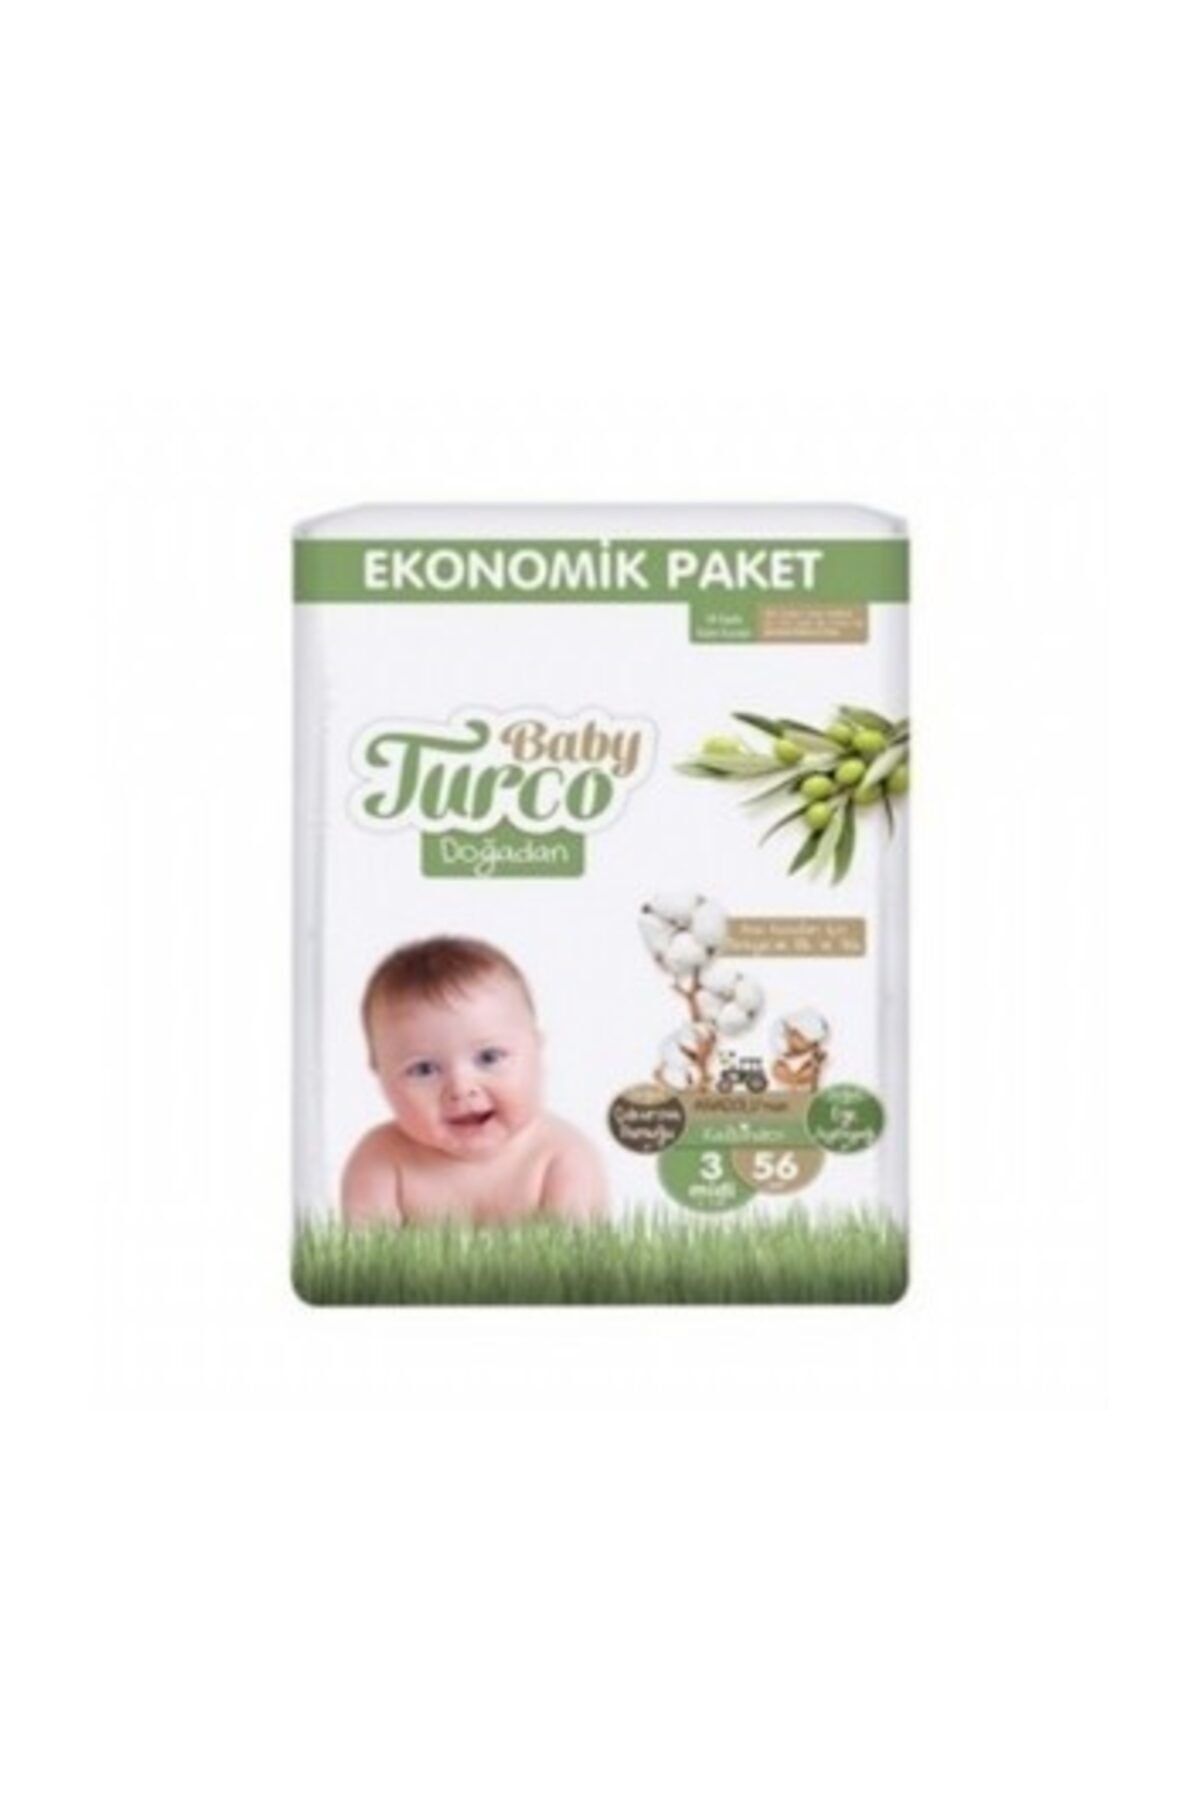 Baby Turco Bebek Bezi Ekonomik Paket 56'lı (3 Numara)